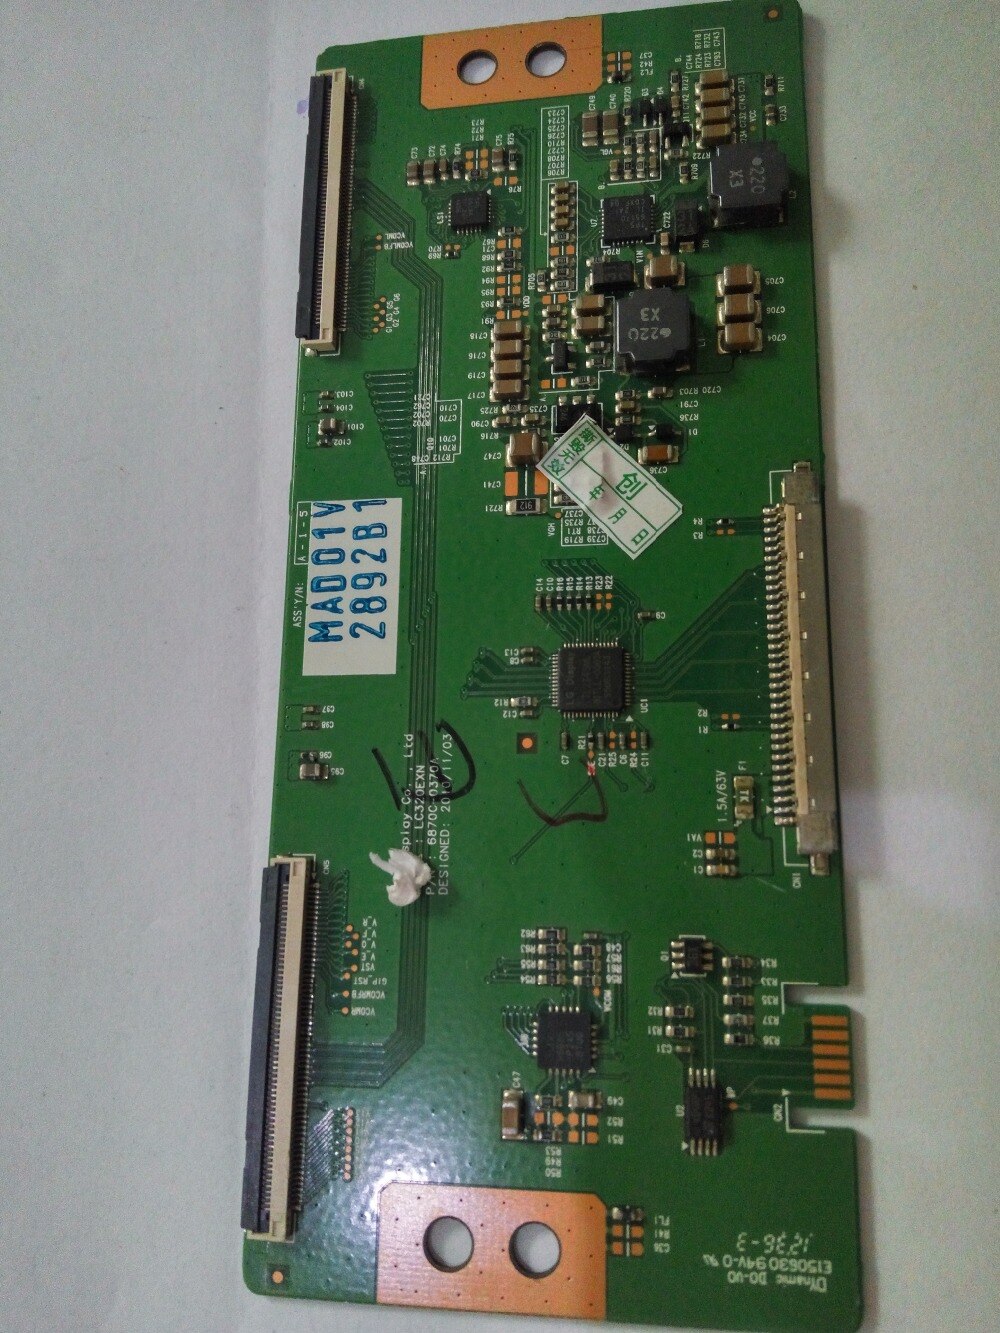 Lc320exn-sea1-k31 logic board 6870c-0370a connect with T-CON connect board